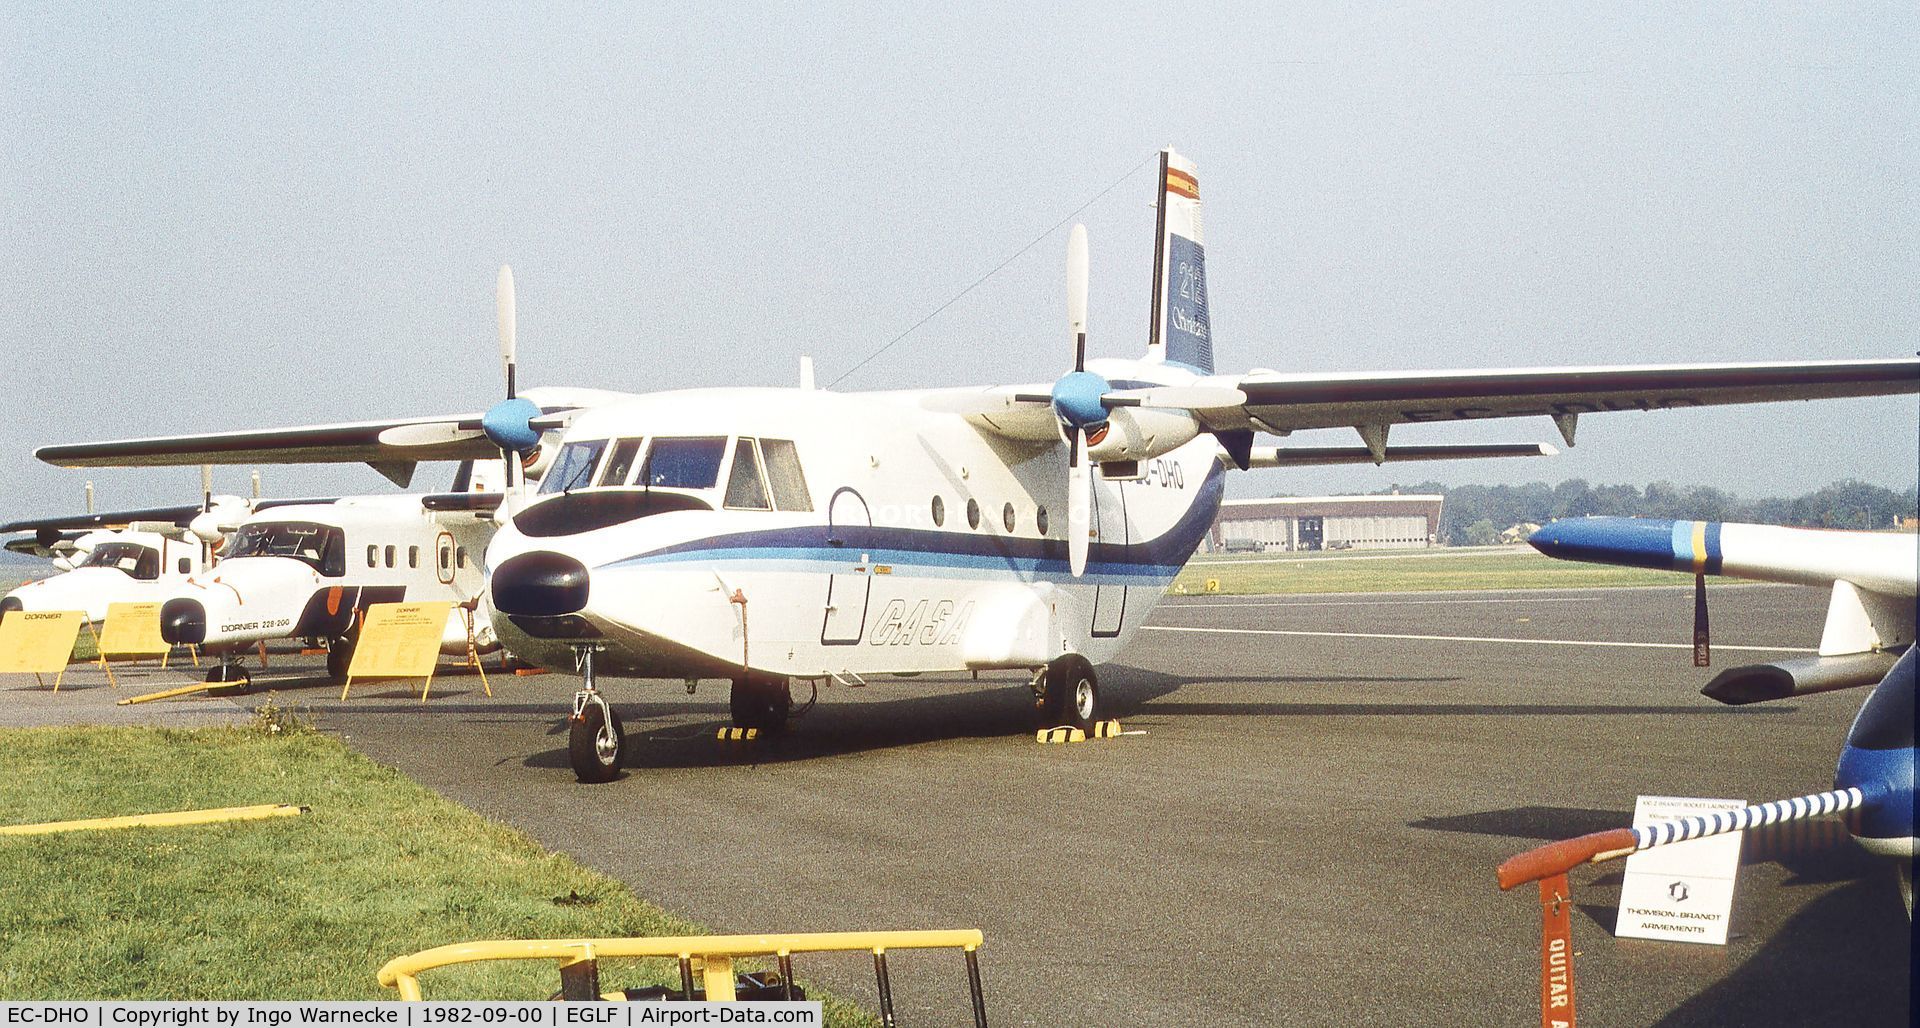 EC-DHO, 1979 CASA C-212-100 Aviocar C/N 139, CASA C-212-100 Aviocar at Farnborough International 1982